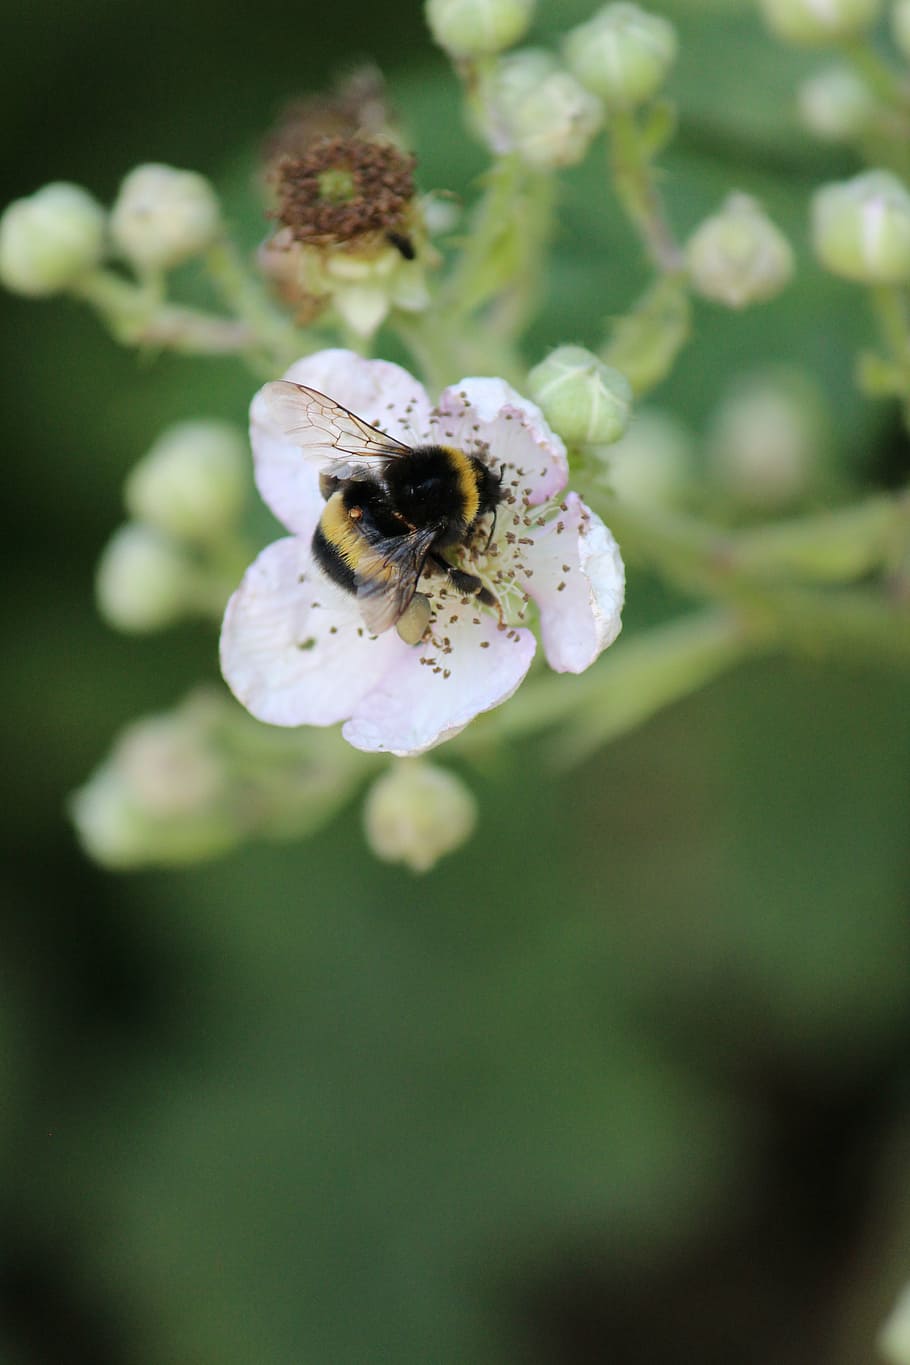 blackberry, hummel, garden, pollination, nectar, close, pollen, nature, bee, flower